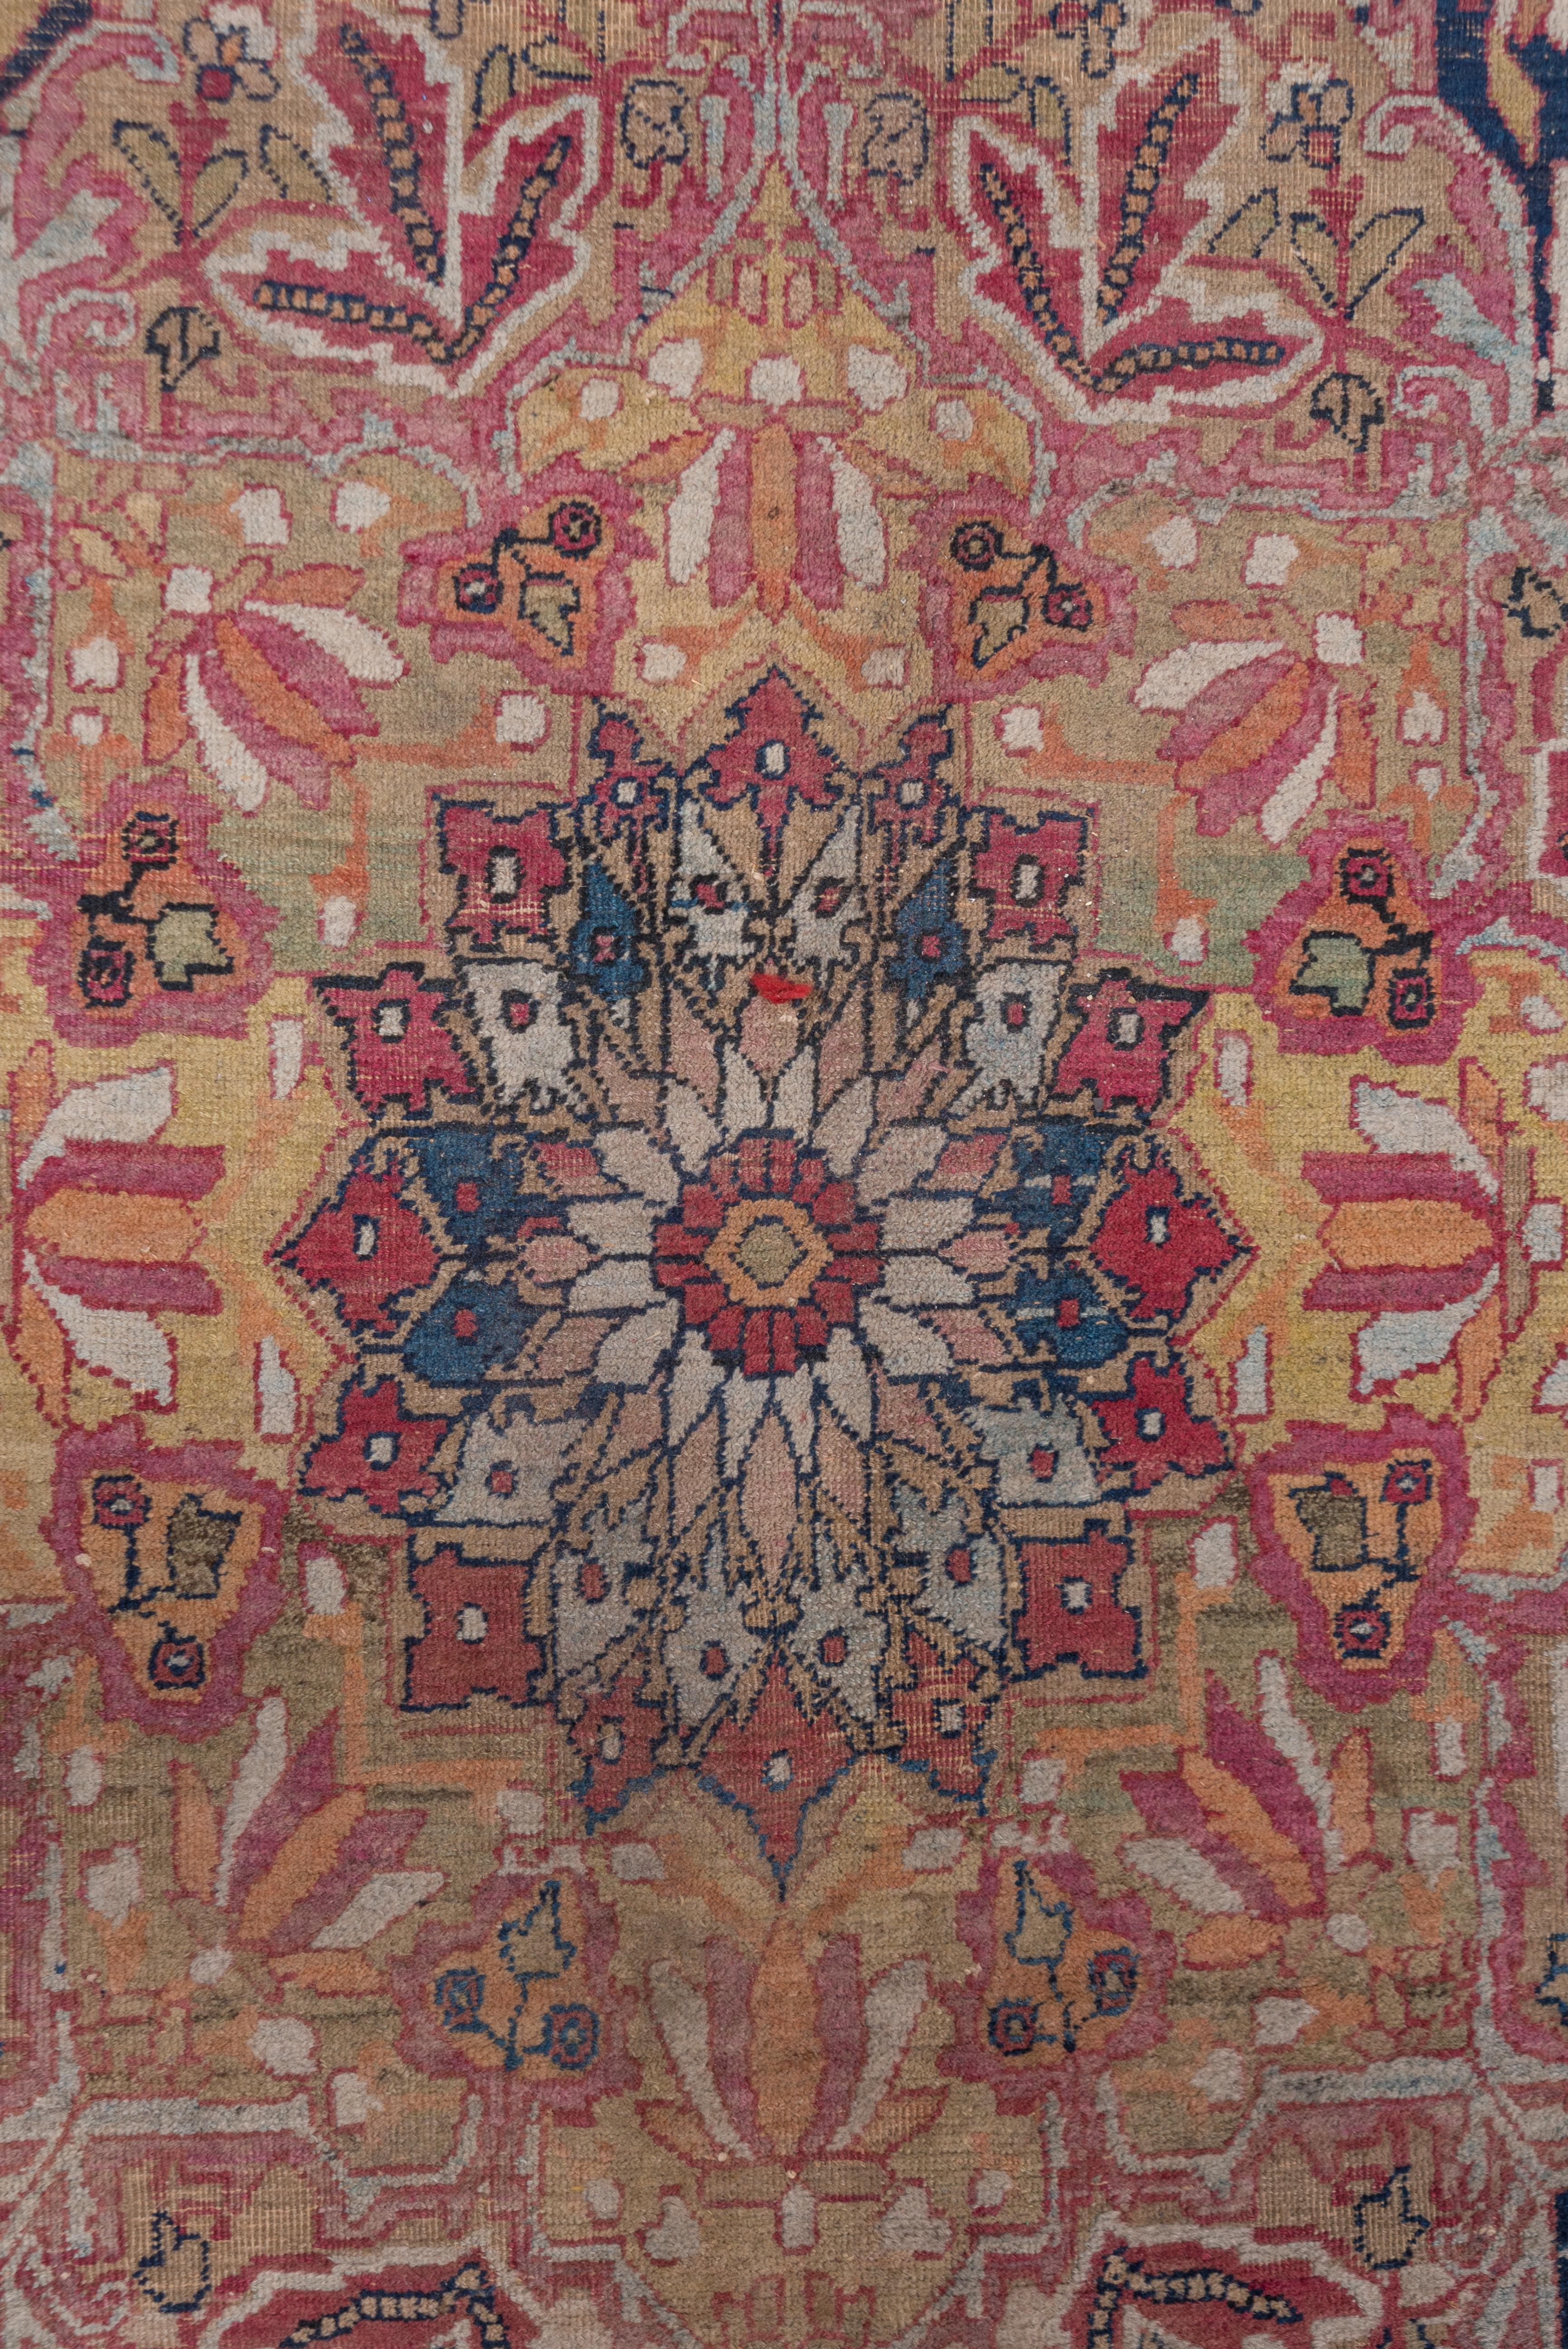 Late 19th Century Colorful Persian Lavar Kerman Carpet